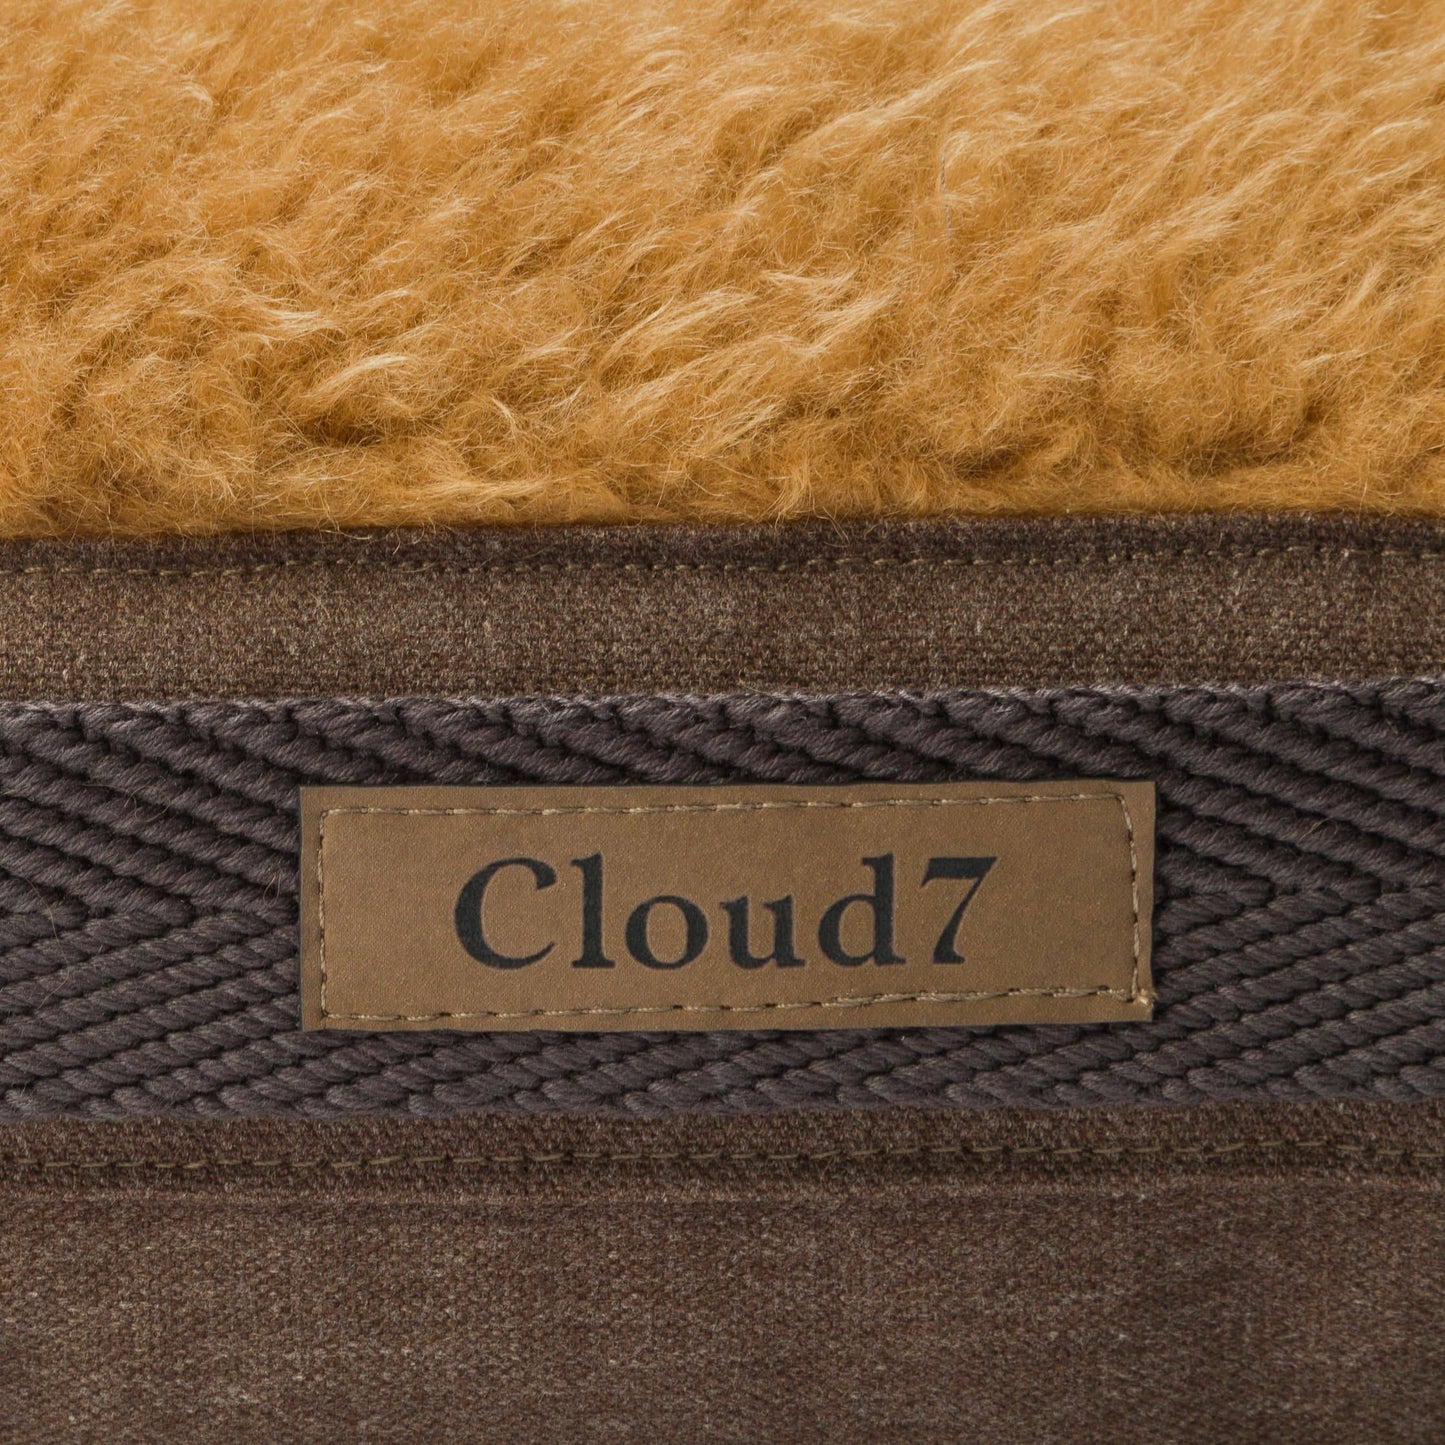 Cloud7 - Hundemadras siesta, plush camel